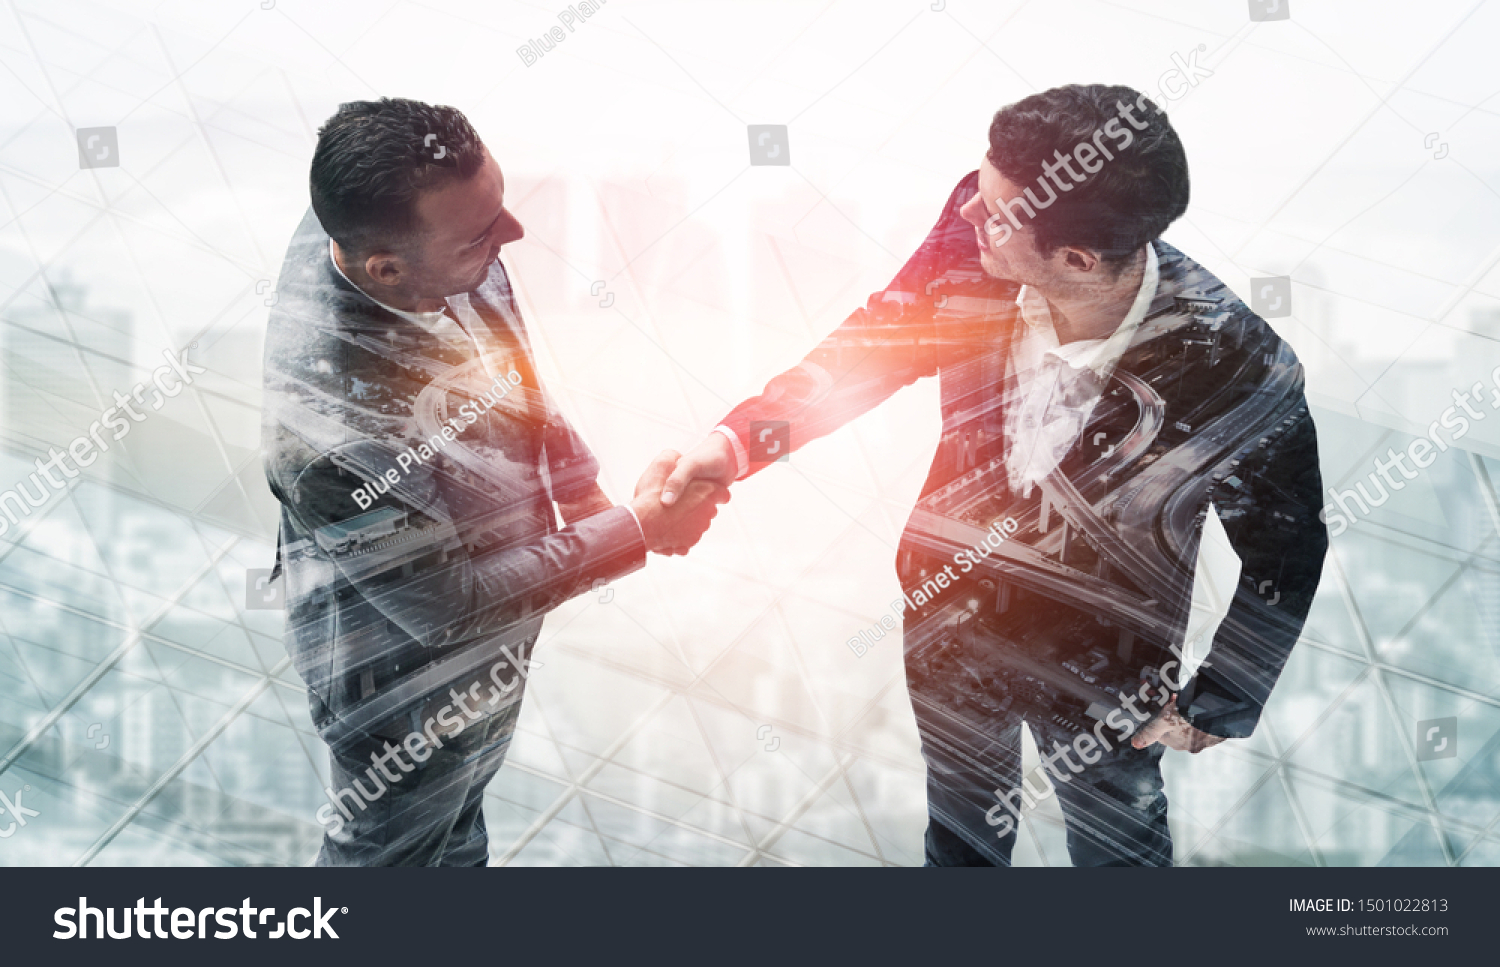 Agreement of Partnership Concept - Double exposure image of businessmen handshake. Corporate teamwork, trust partner and work agreement. #1501022813